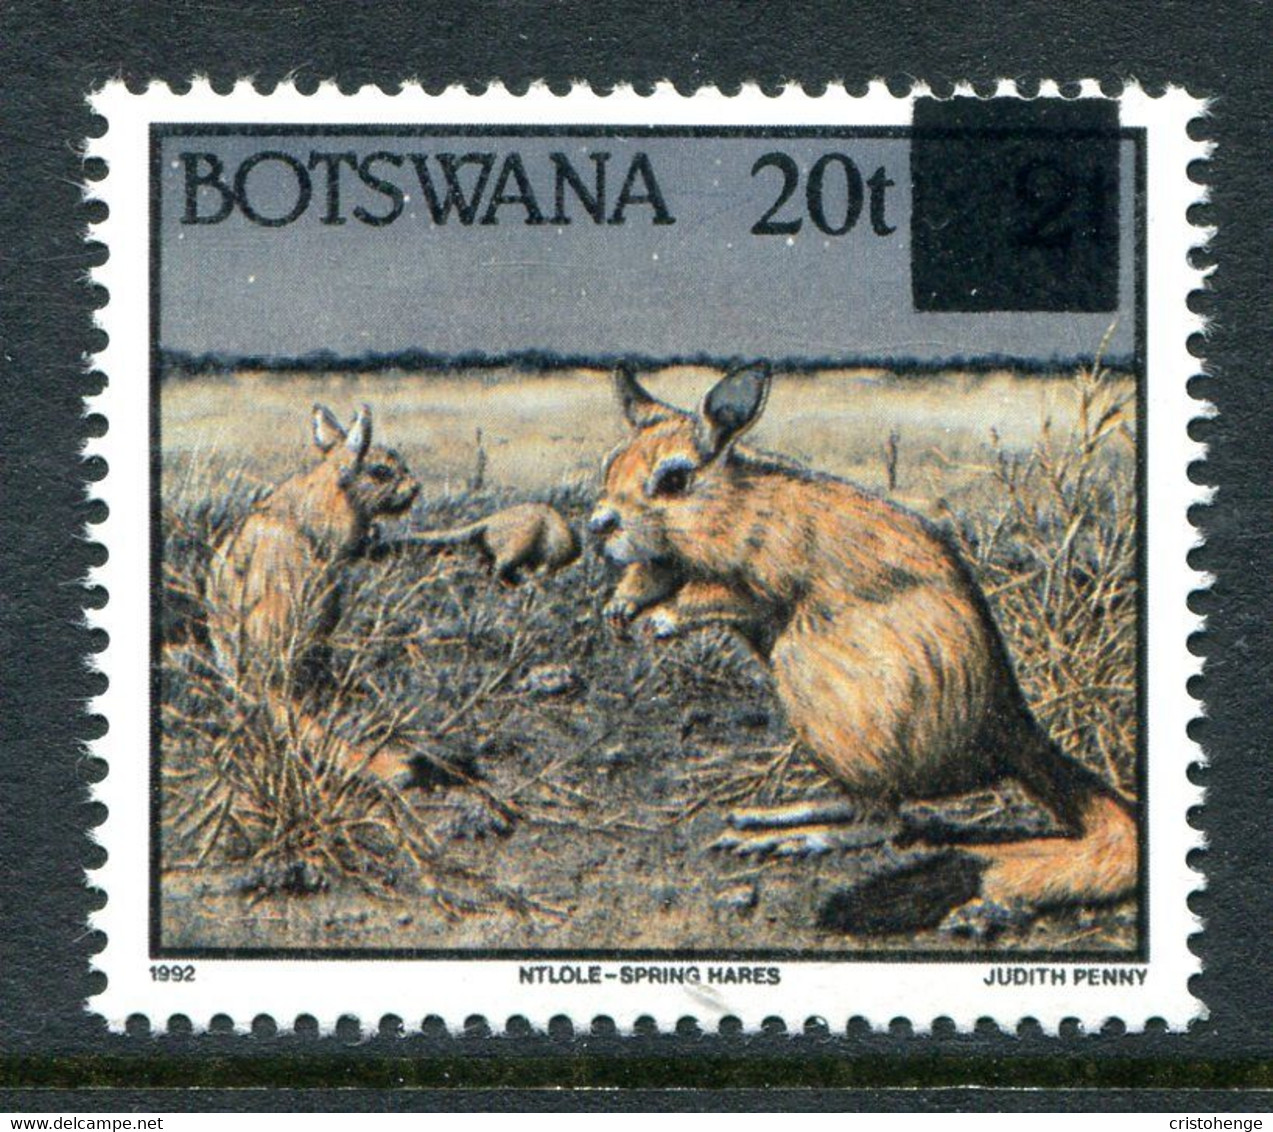 Botswana 1996 Animal Surcharges - 20t On 2t Spring Hare MNH (SG 817) - Botswana (1966-...)